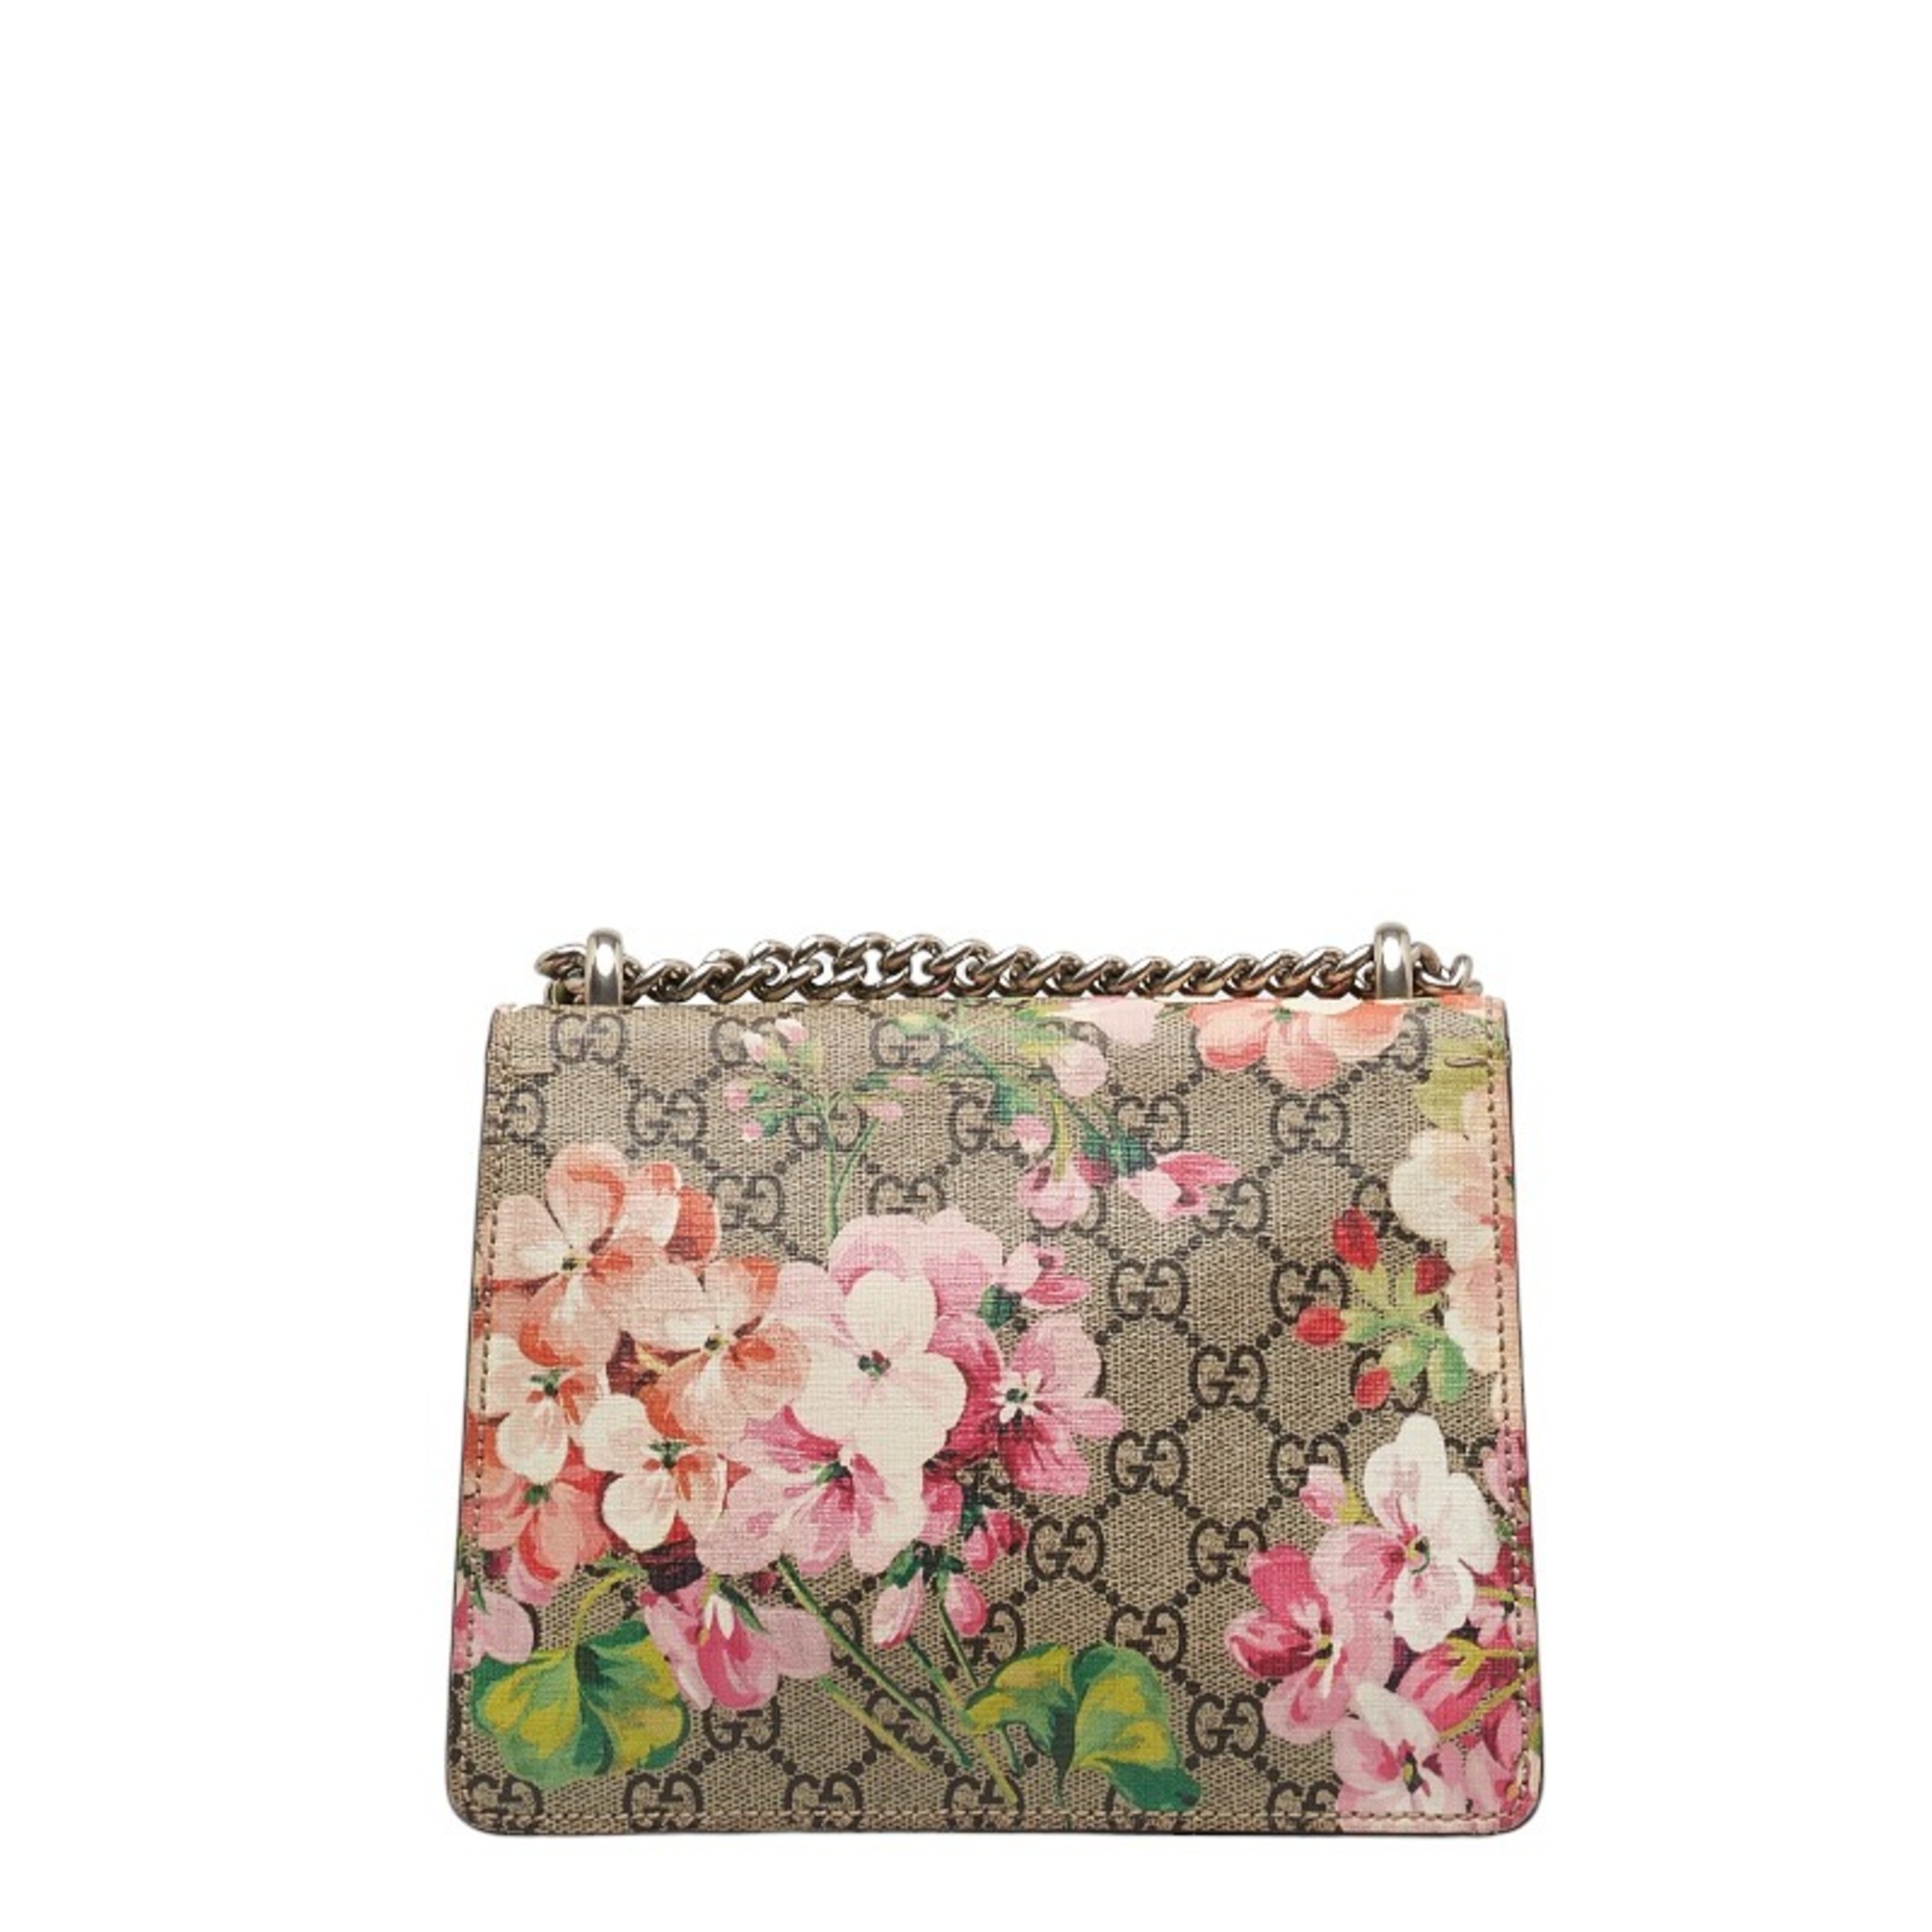 Gucci GG Supreme Blooms Dionysus Chain Shoulder Bag 421970 Beige Pink PVC Suede Women's GUCCI